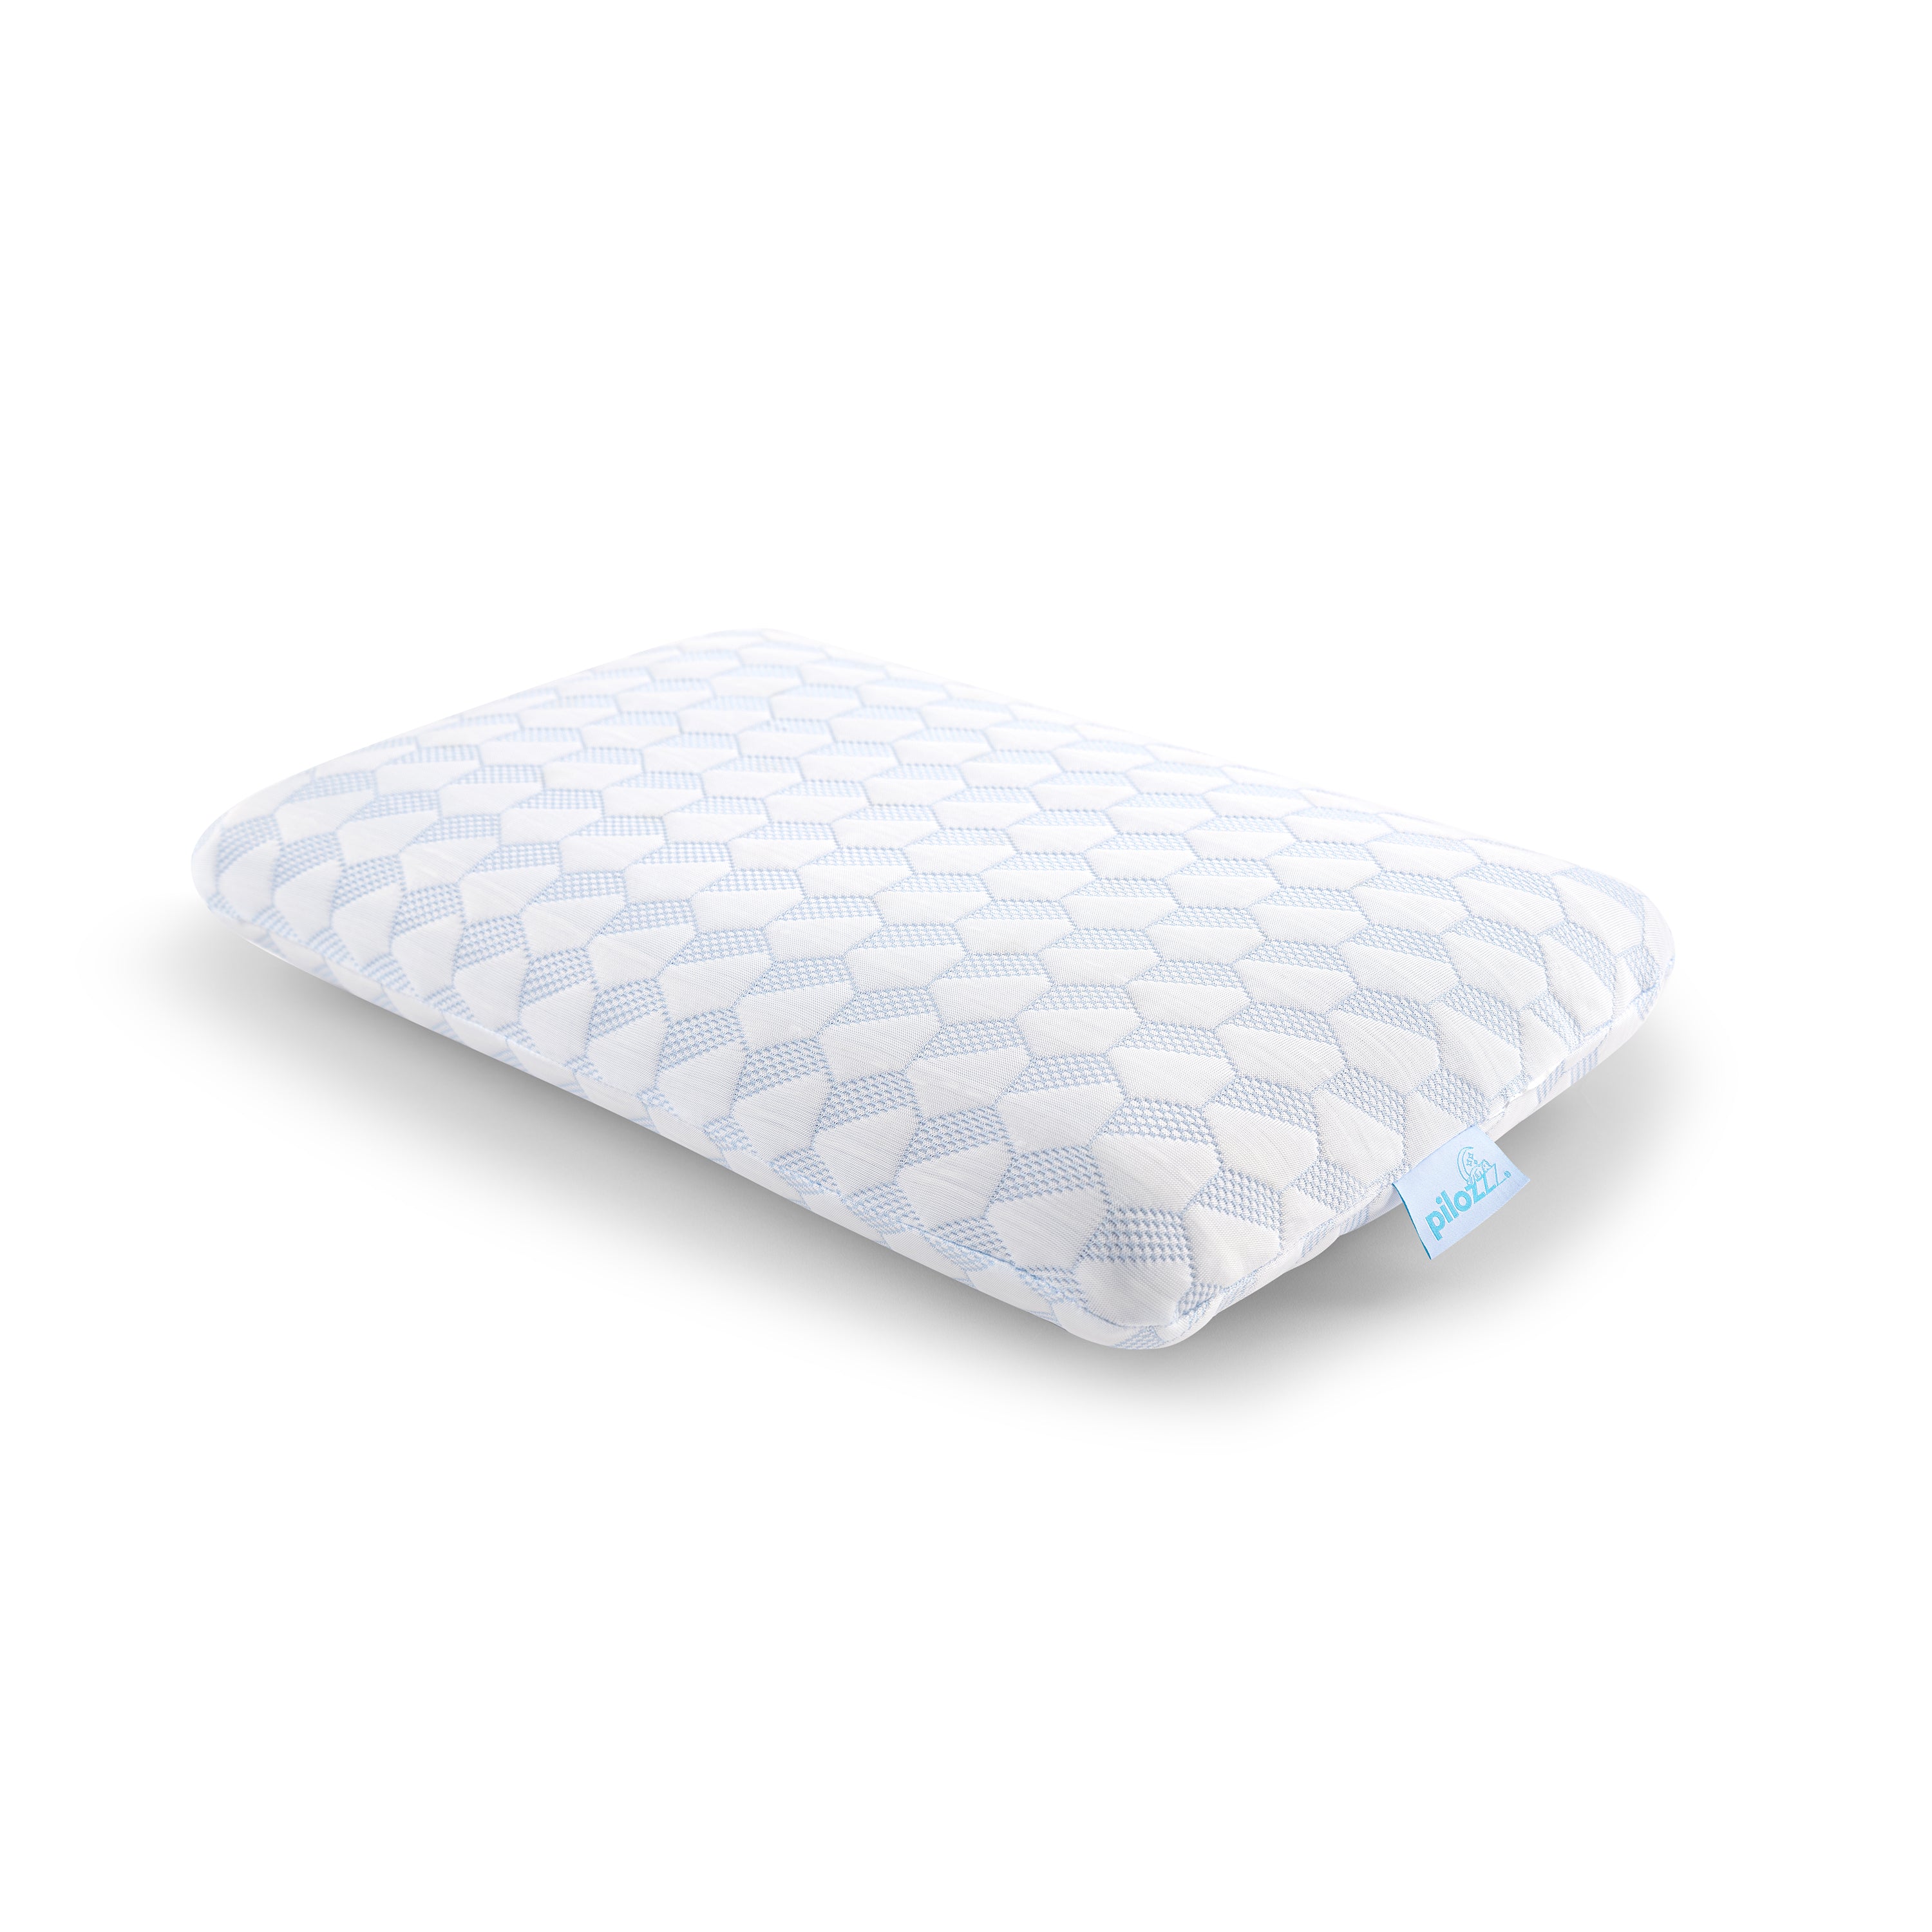 Cooling Knit Memory Foam Classic Pillow